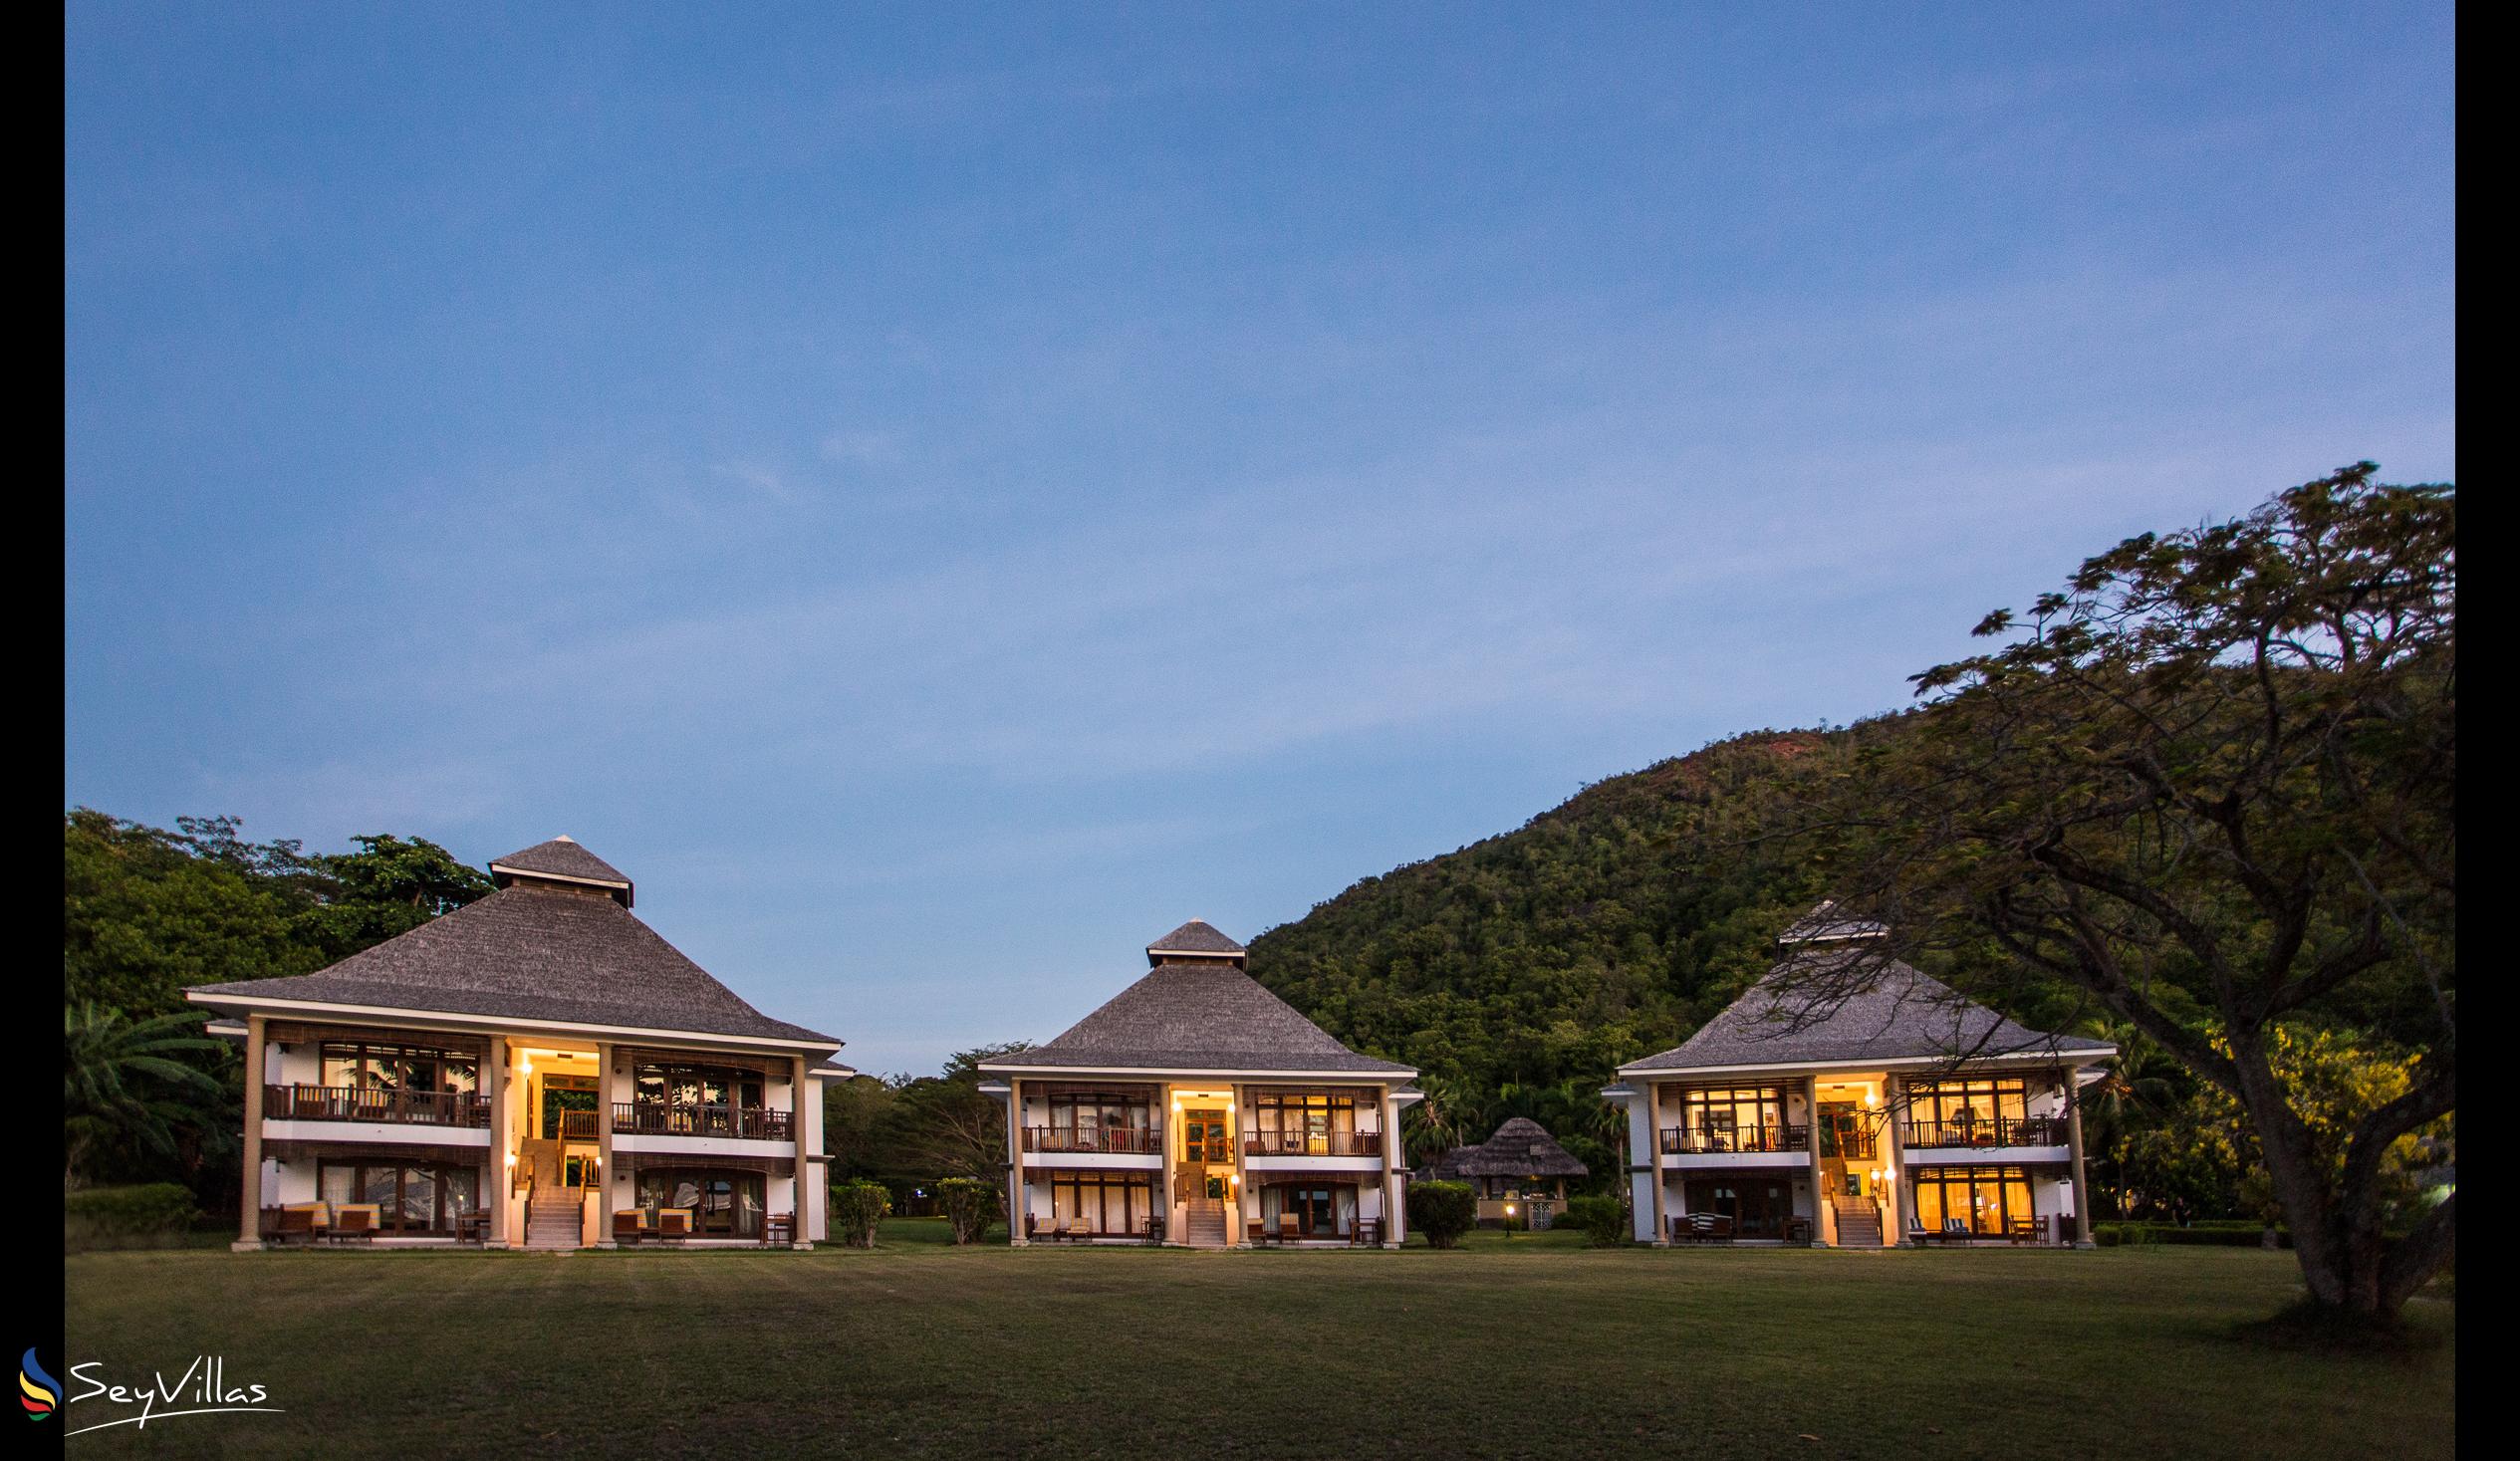 Photo 2: Le Domaine de La Reserve - Outdoor area - Praslin (Seychelles)